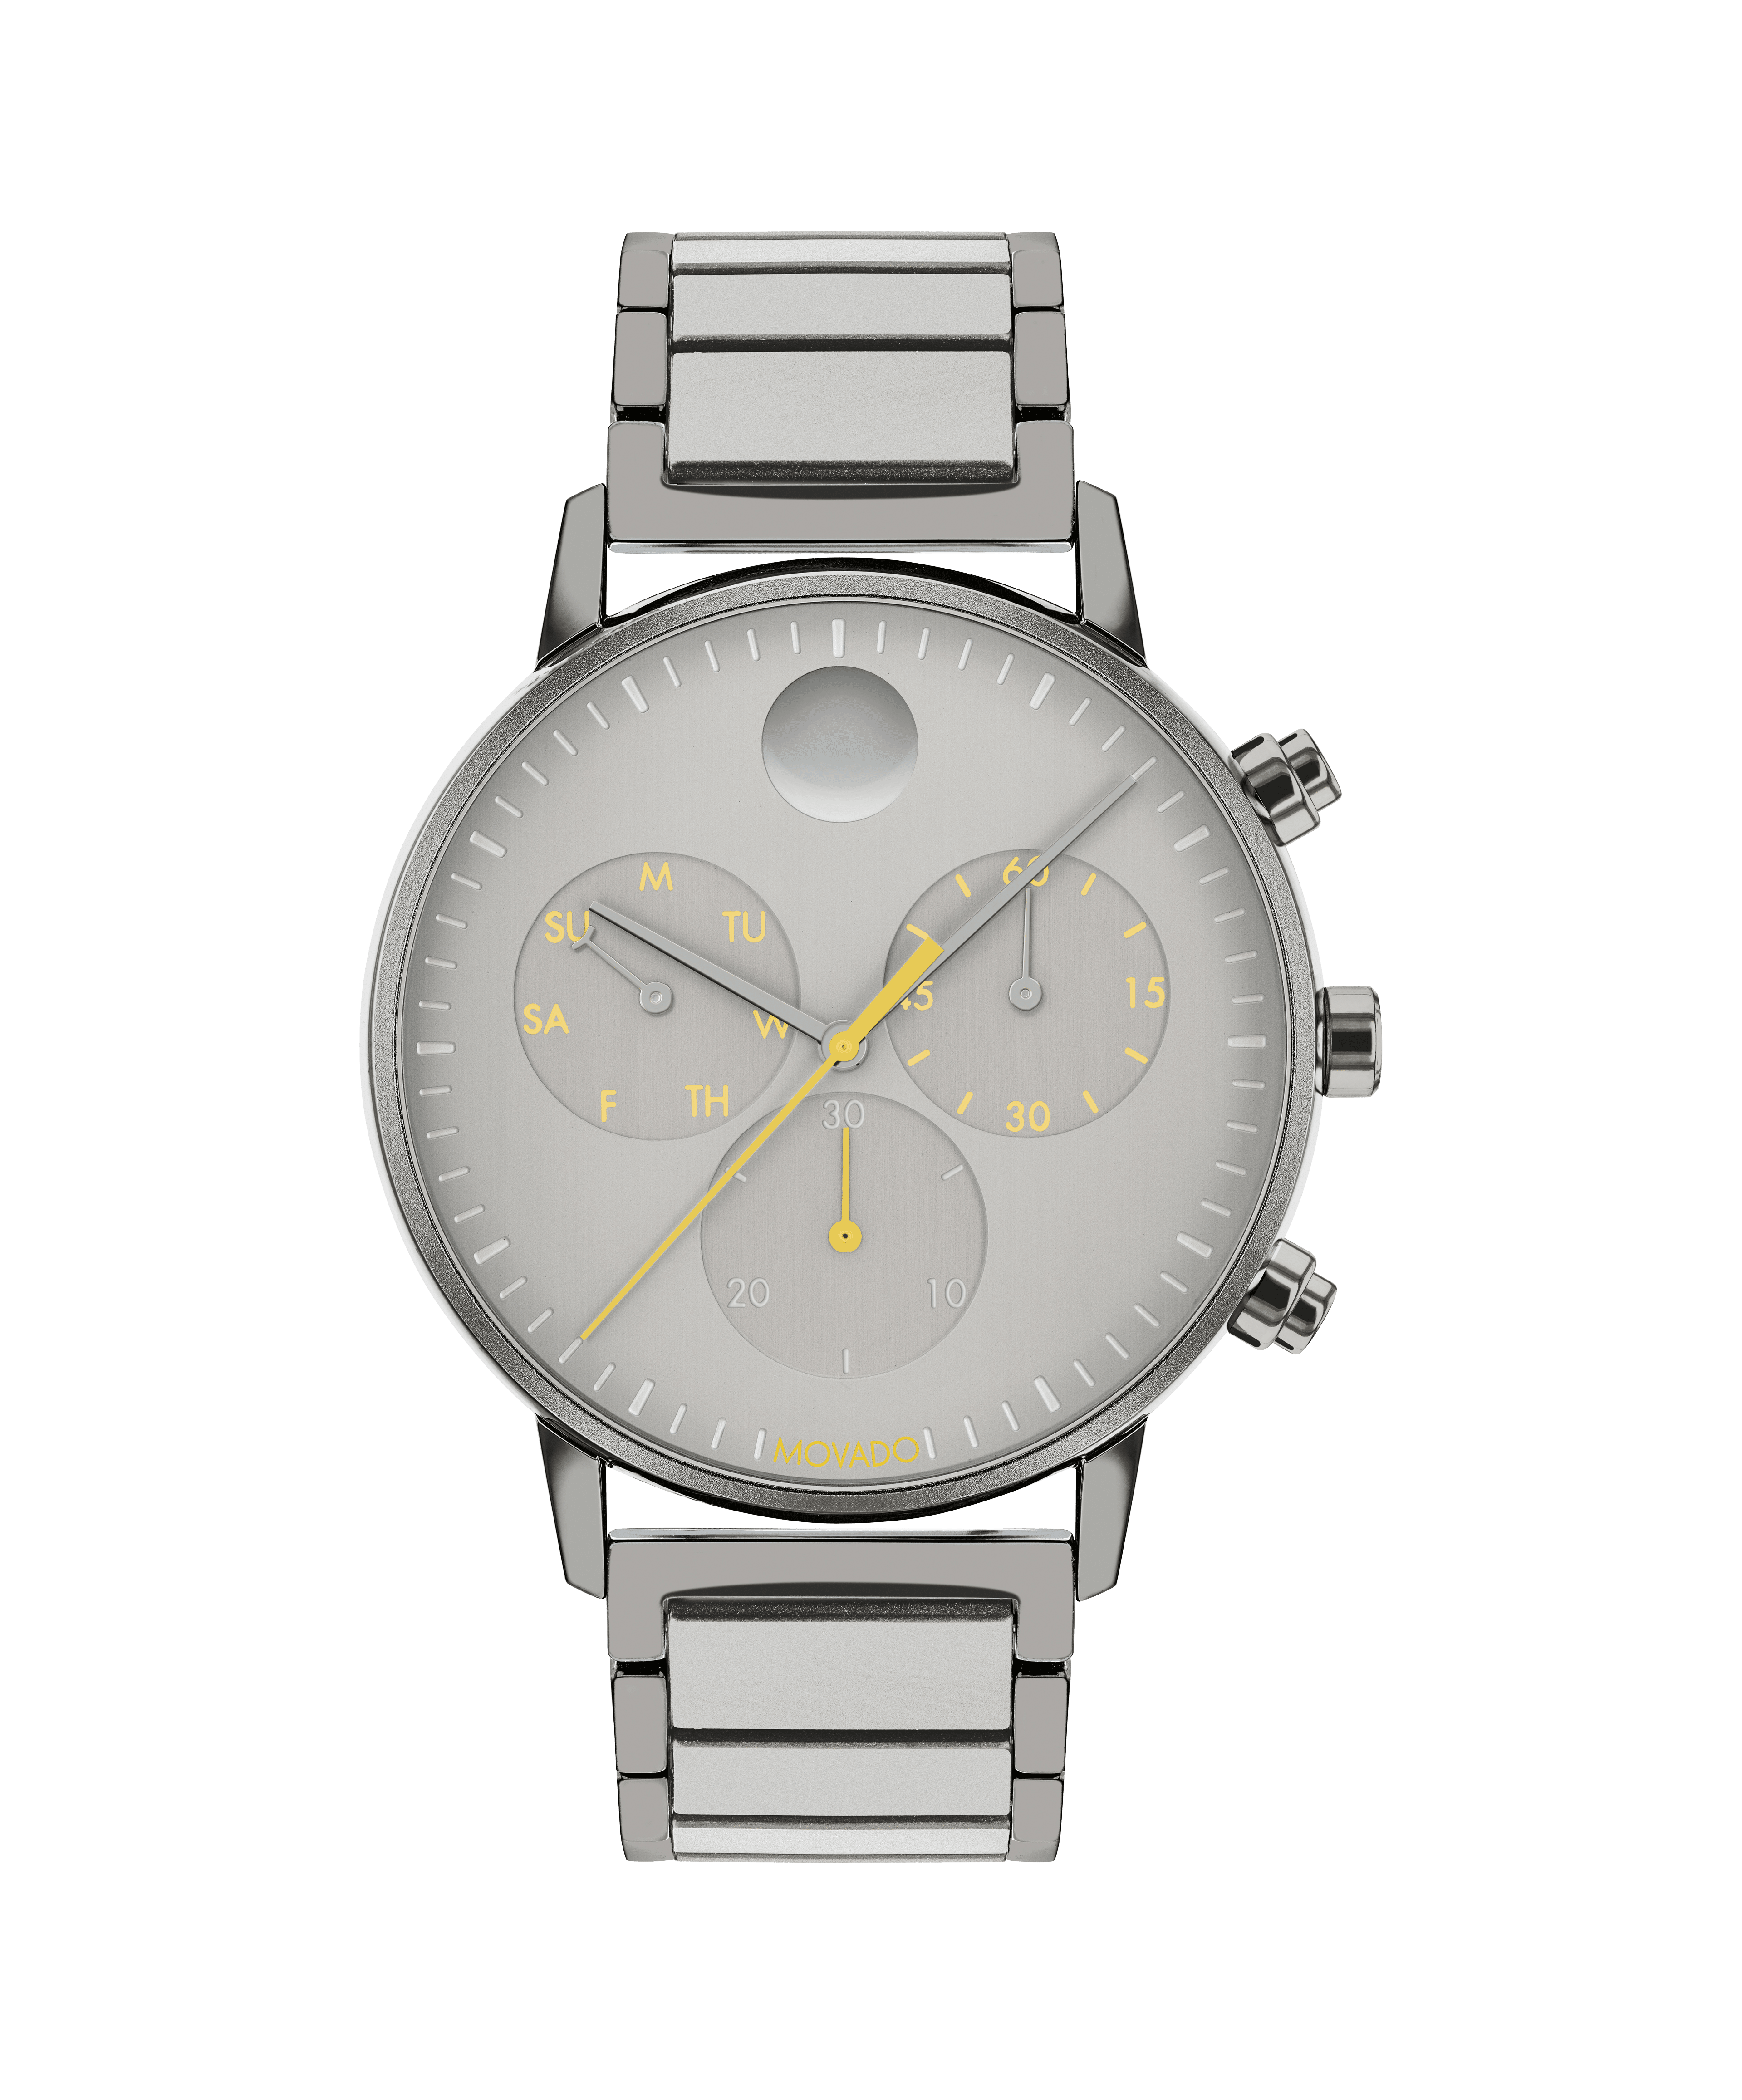 Movado Classic 5890639 14k 22mm watch